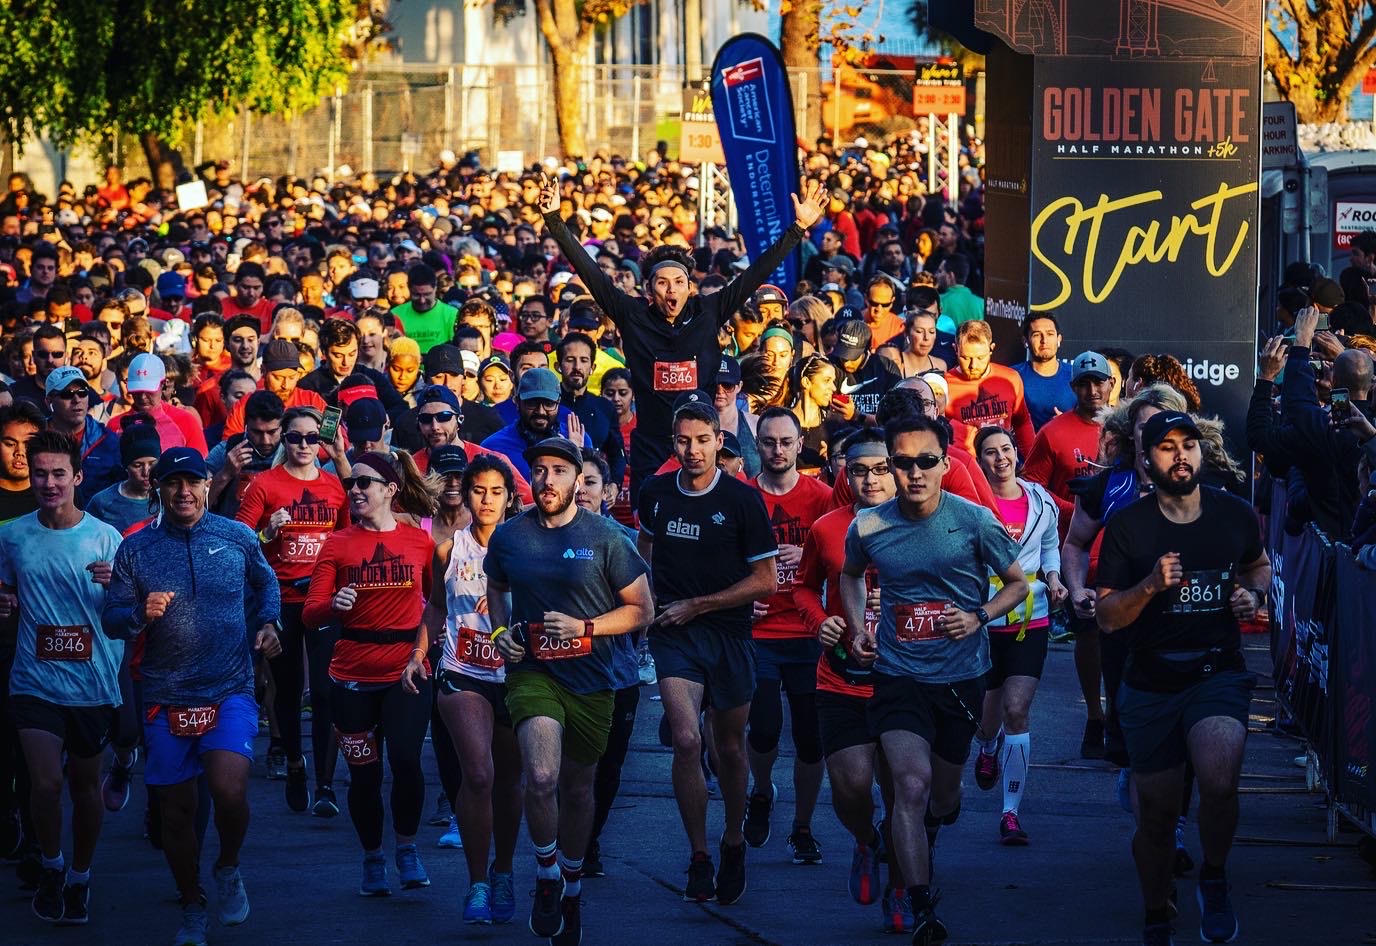 Golden Gate Half Marathon and Sports Basement Announce 2022 Partnership